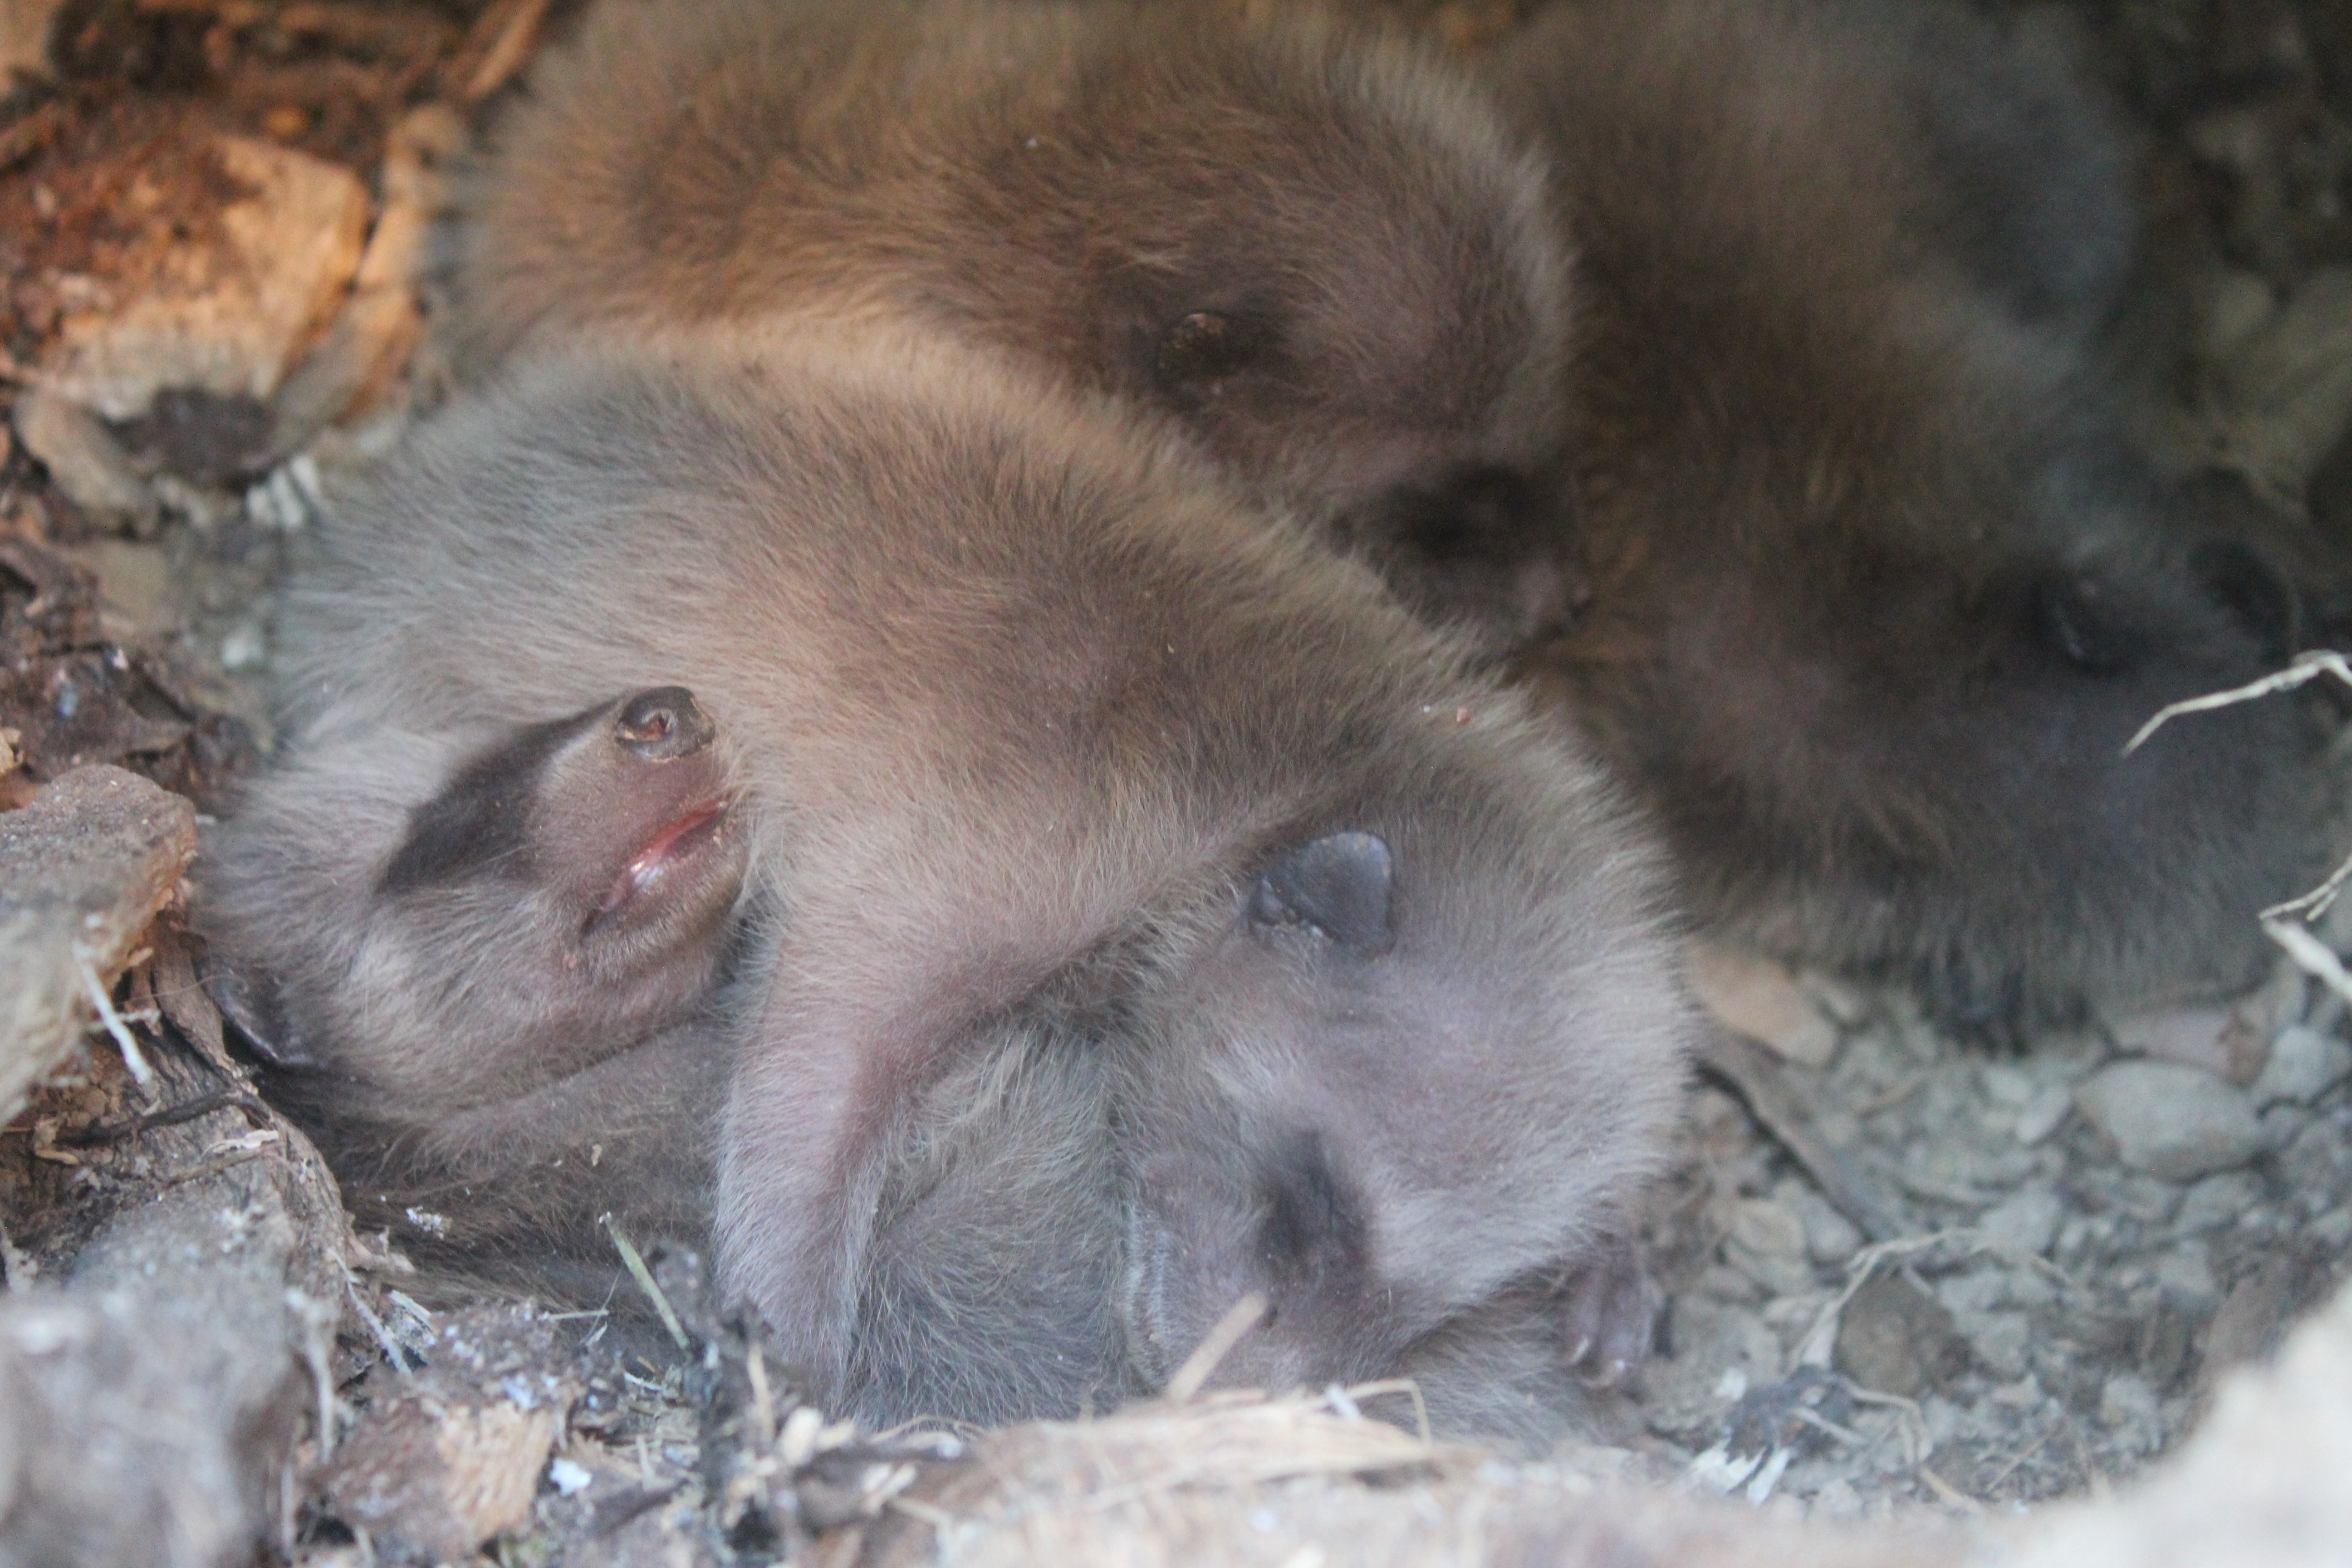 Adorable raccoon babies